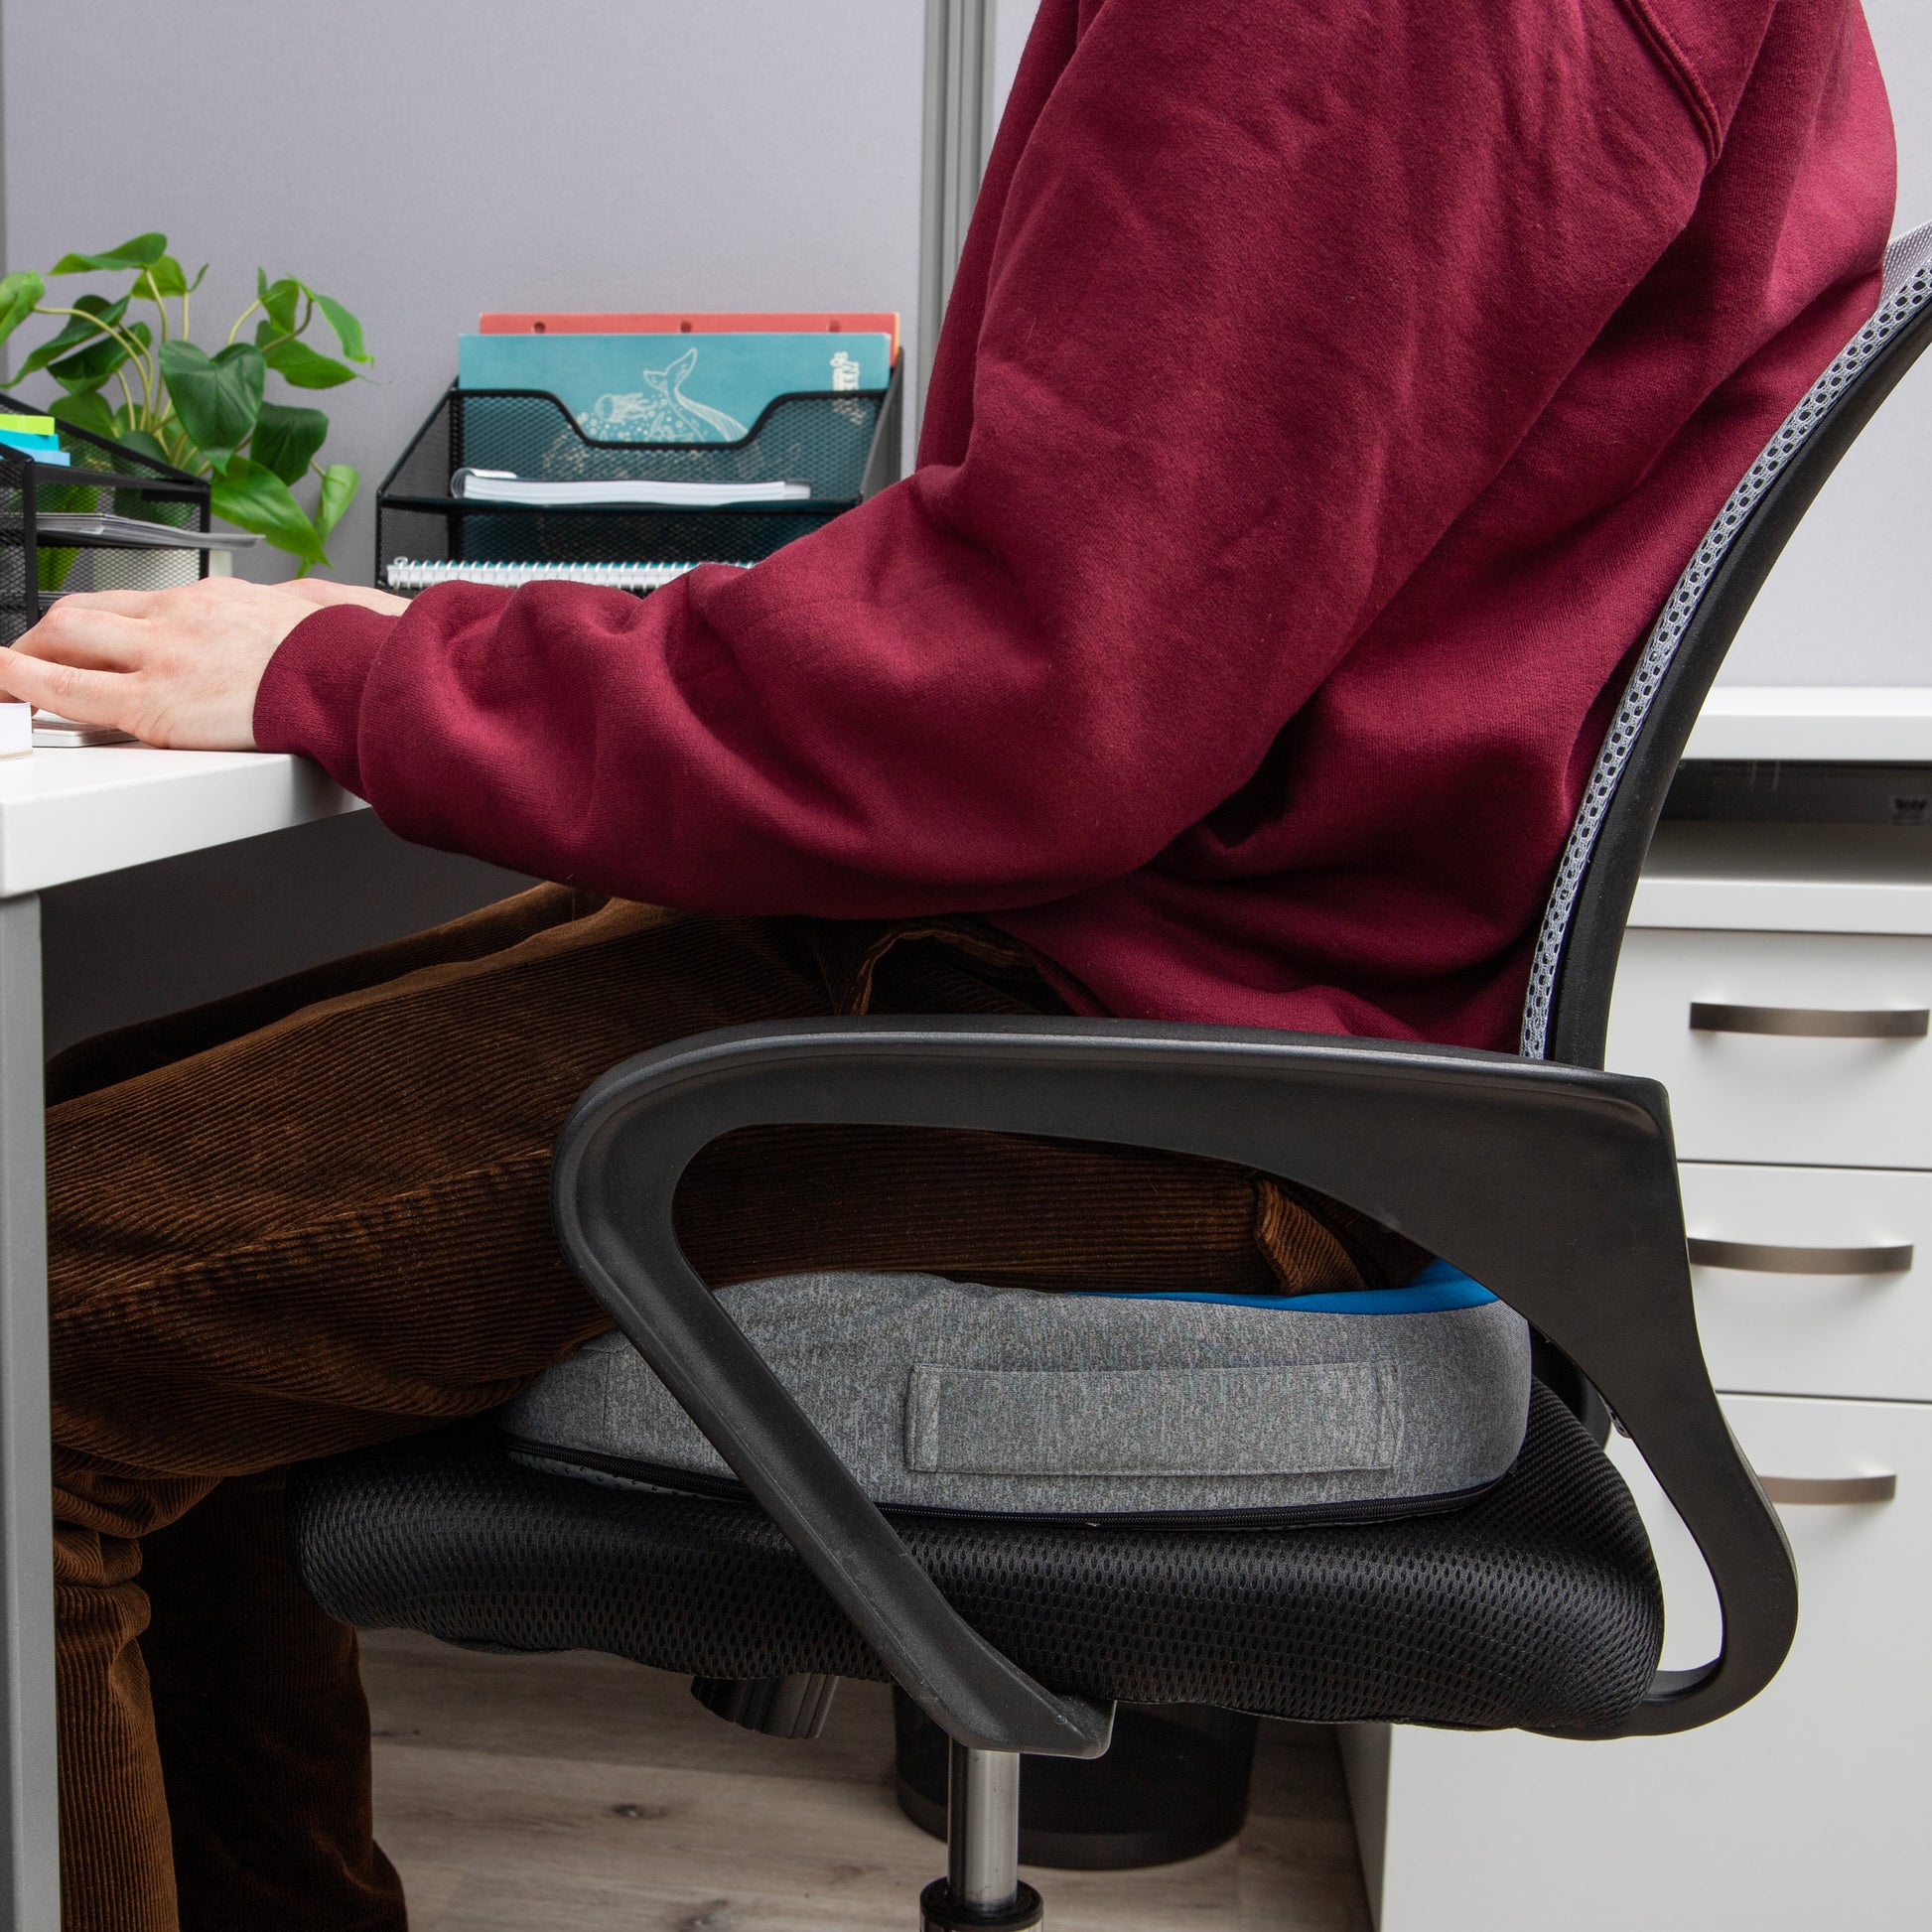 Mind Reader Office Chair Cushion, Ergonomic, Orthopedic, Portable, Car  Seat, Memory Foam, 18.25 L x 15.5 W x 4 H, Gray